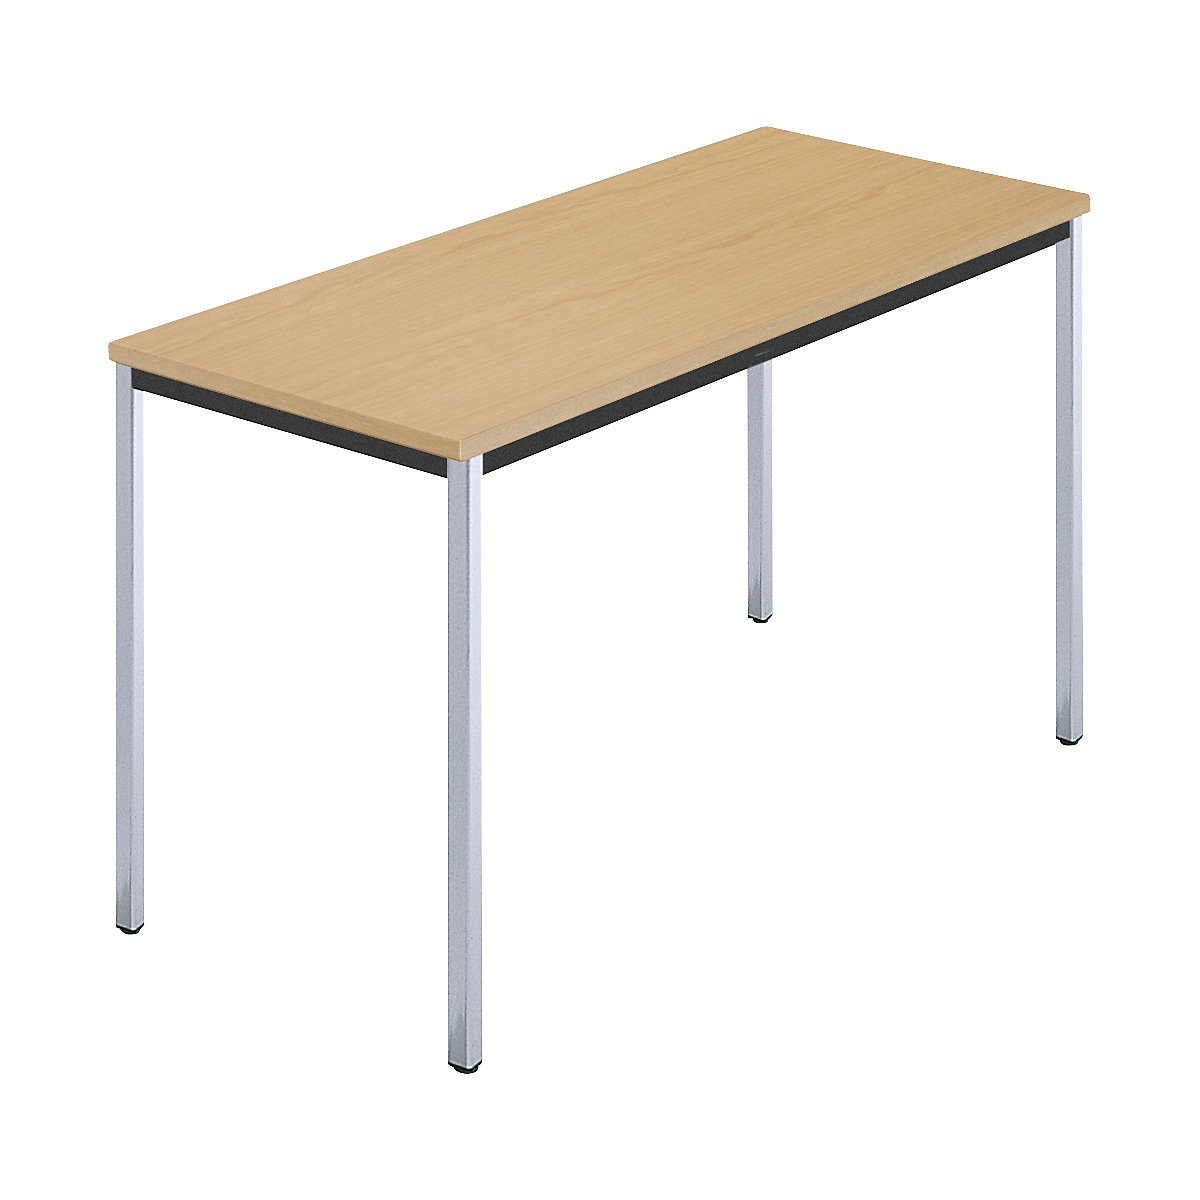 Pravokutni stol, kromirana četverokutna cijev, ŠxD 1200 x 600 mm, prirodna bukva-5